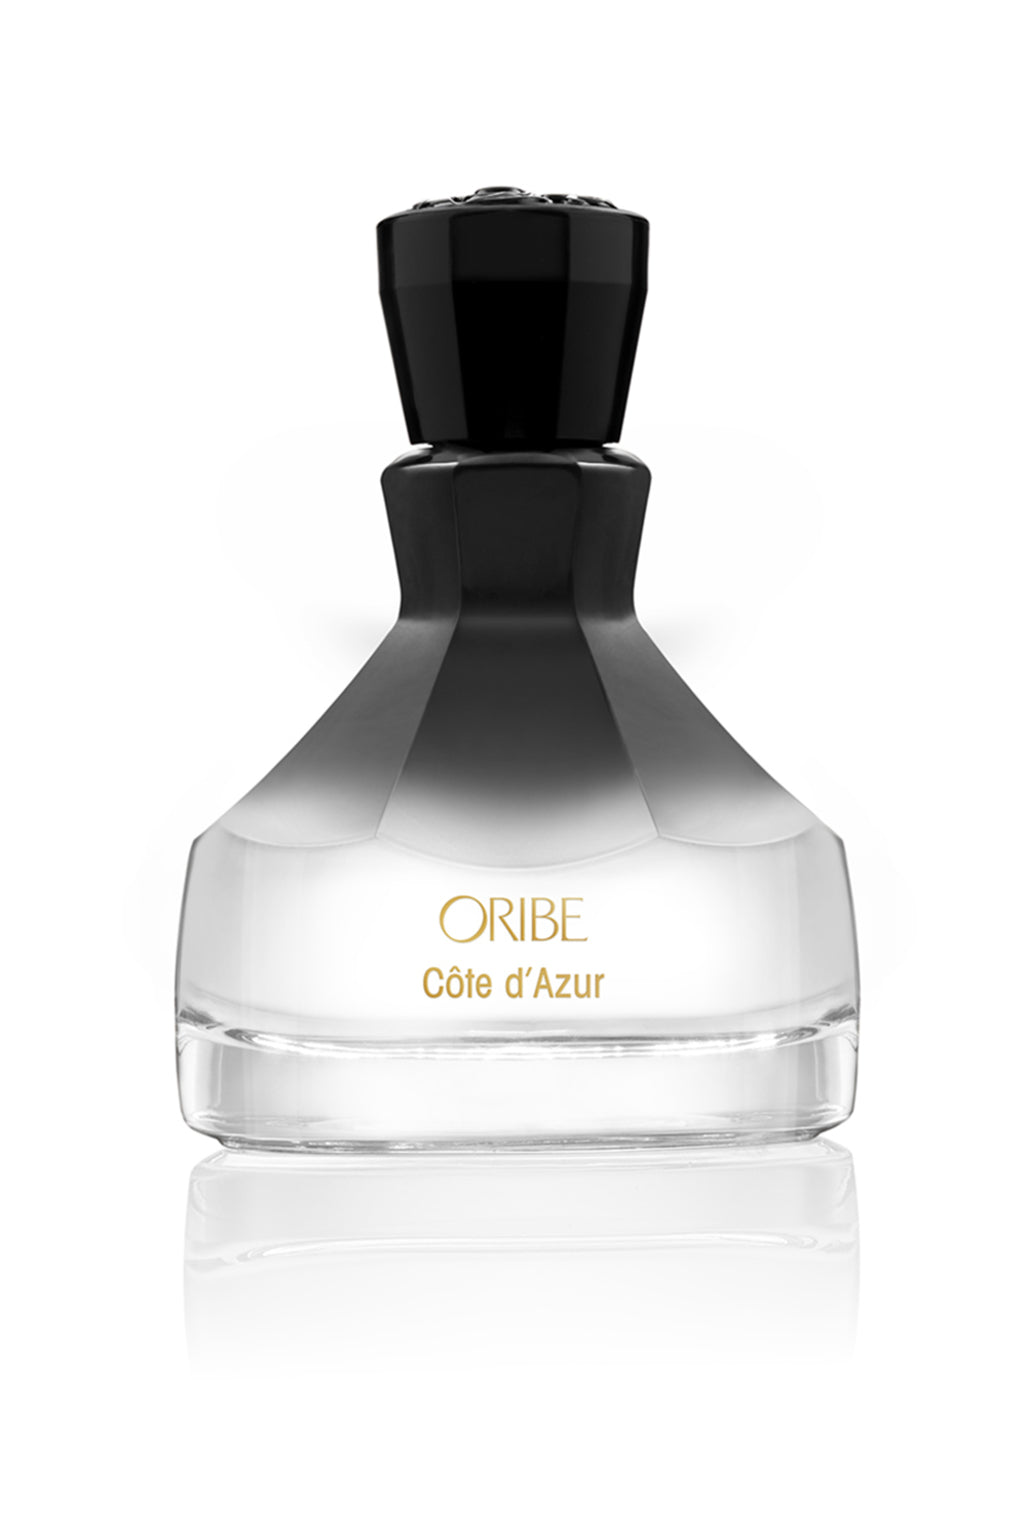 oribe | cote d'azure parfume - KISS AND MAKEUP